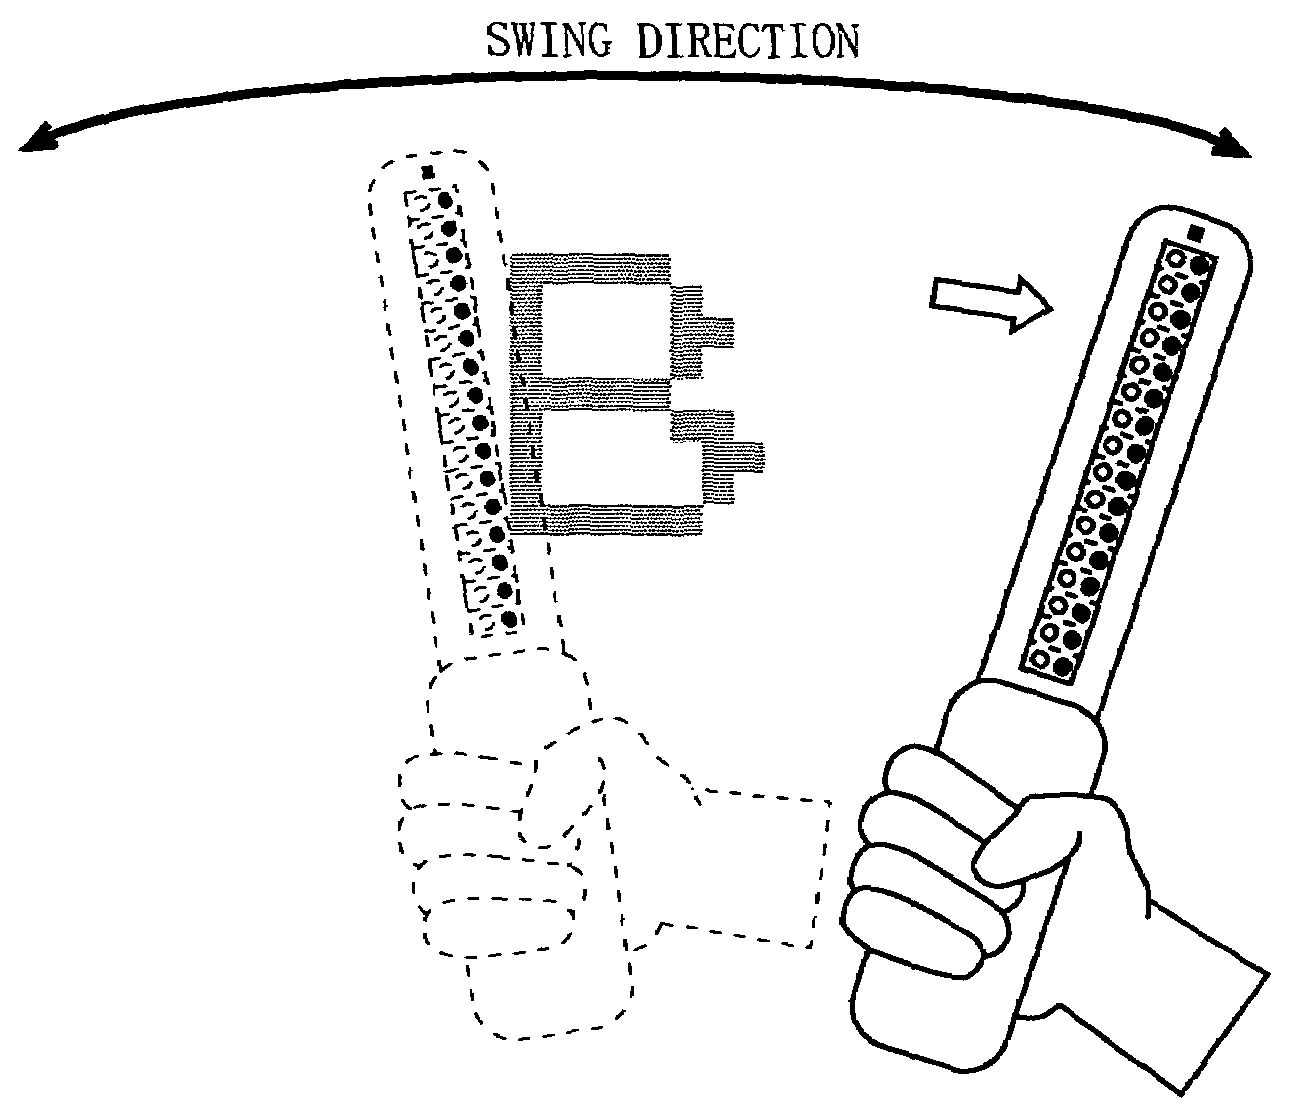 Swing-type display device